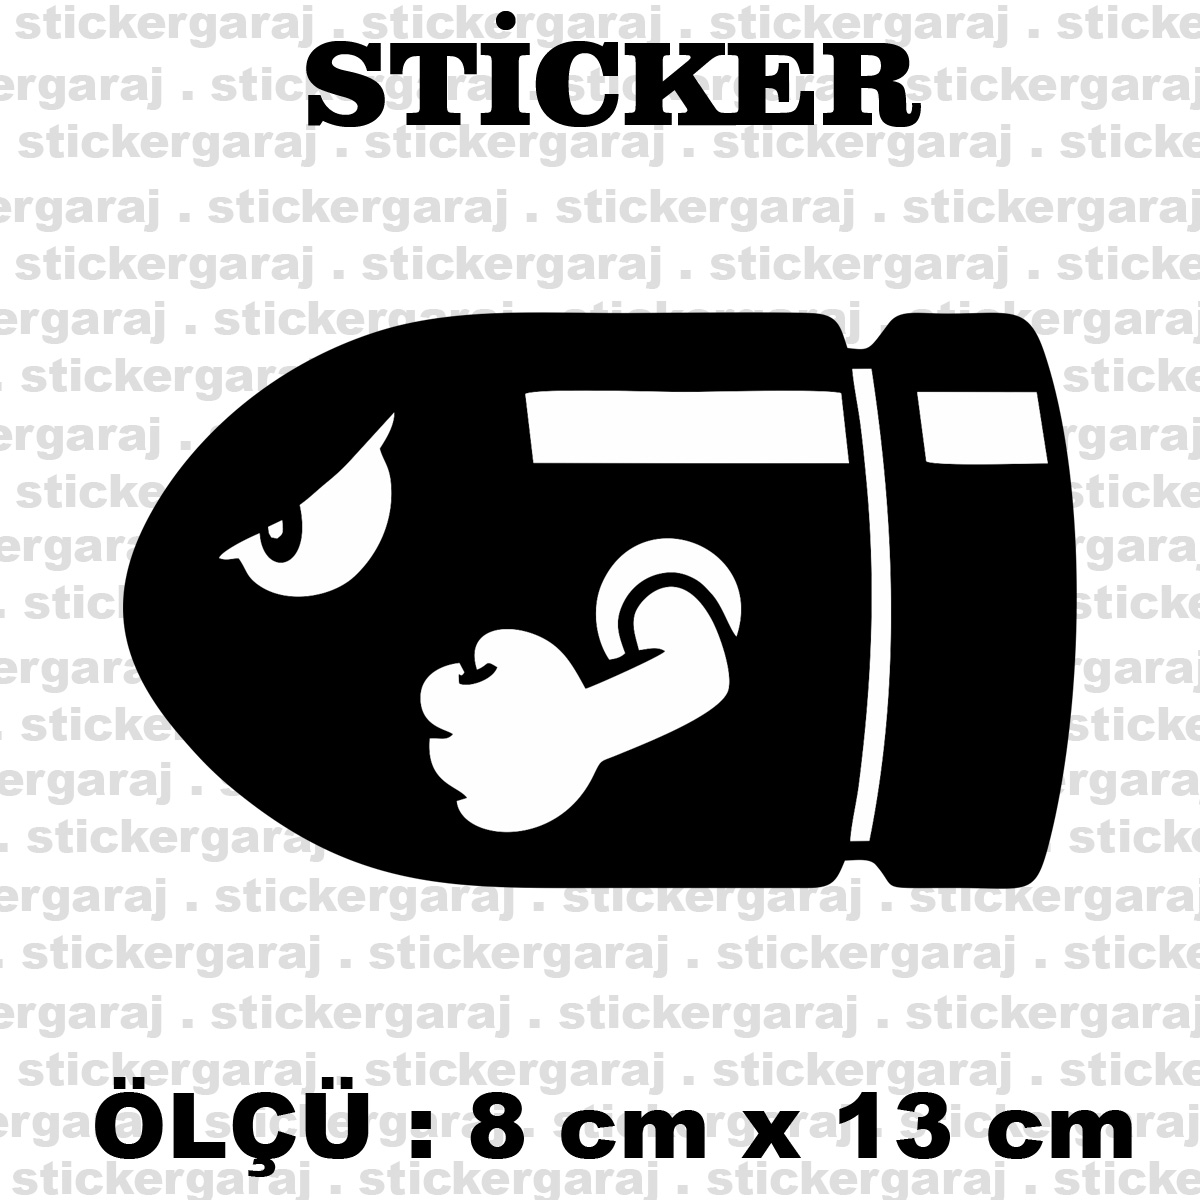 mermi 8 13cm - Mermi efect sticker